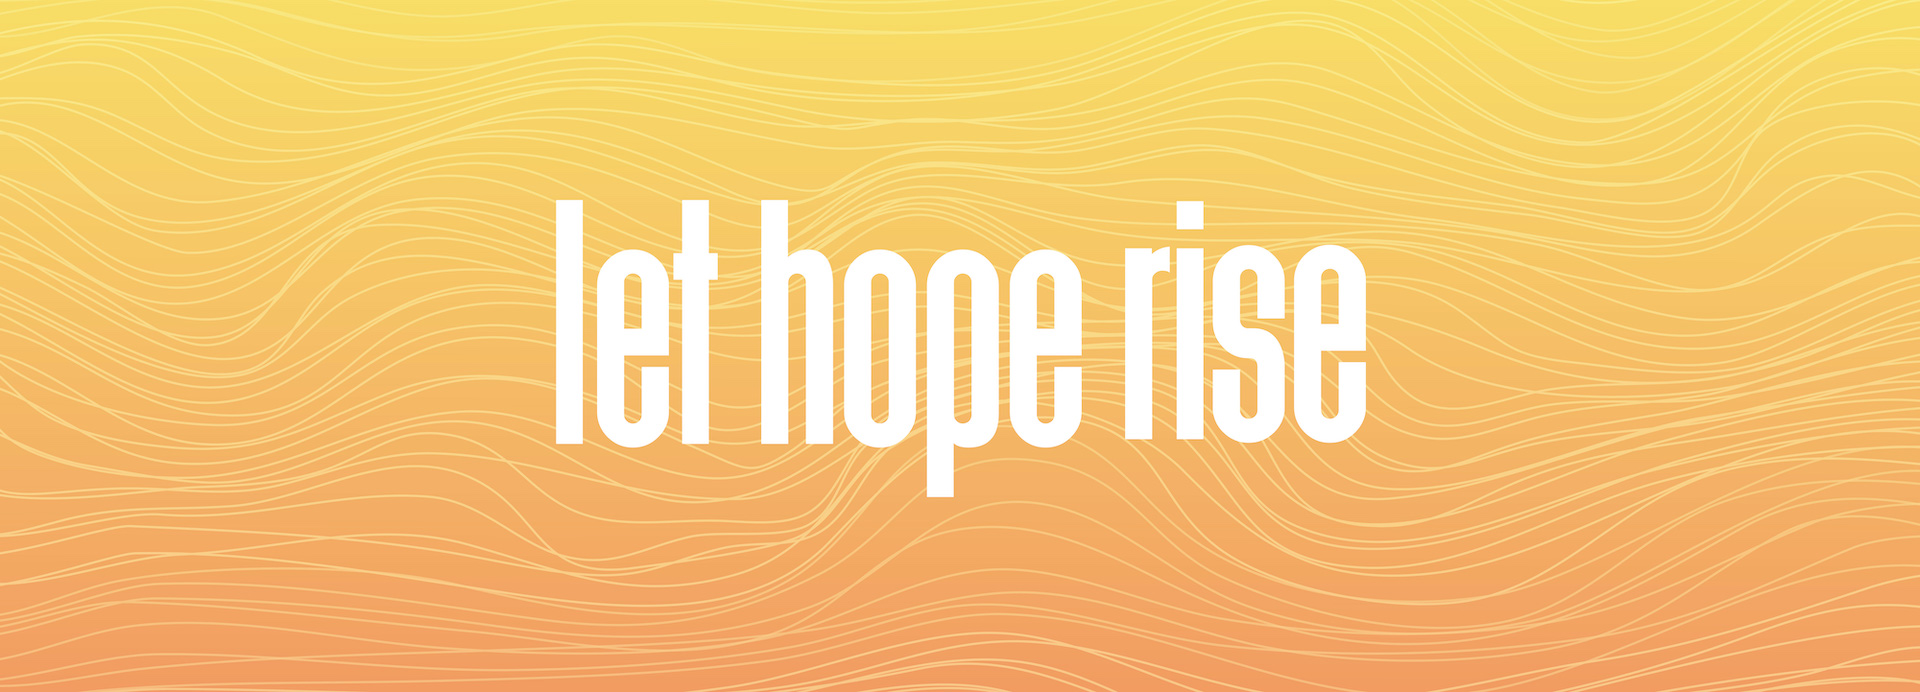 Let Hope Rise | Spring 2019